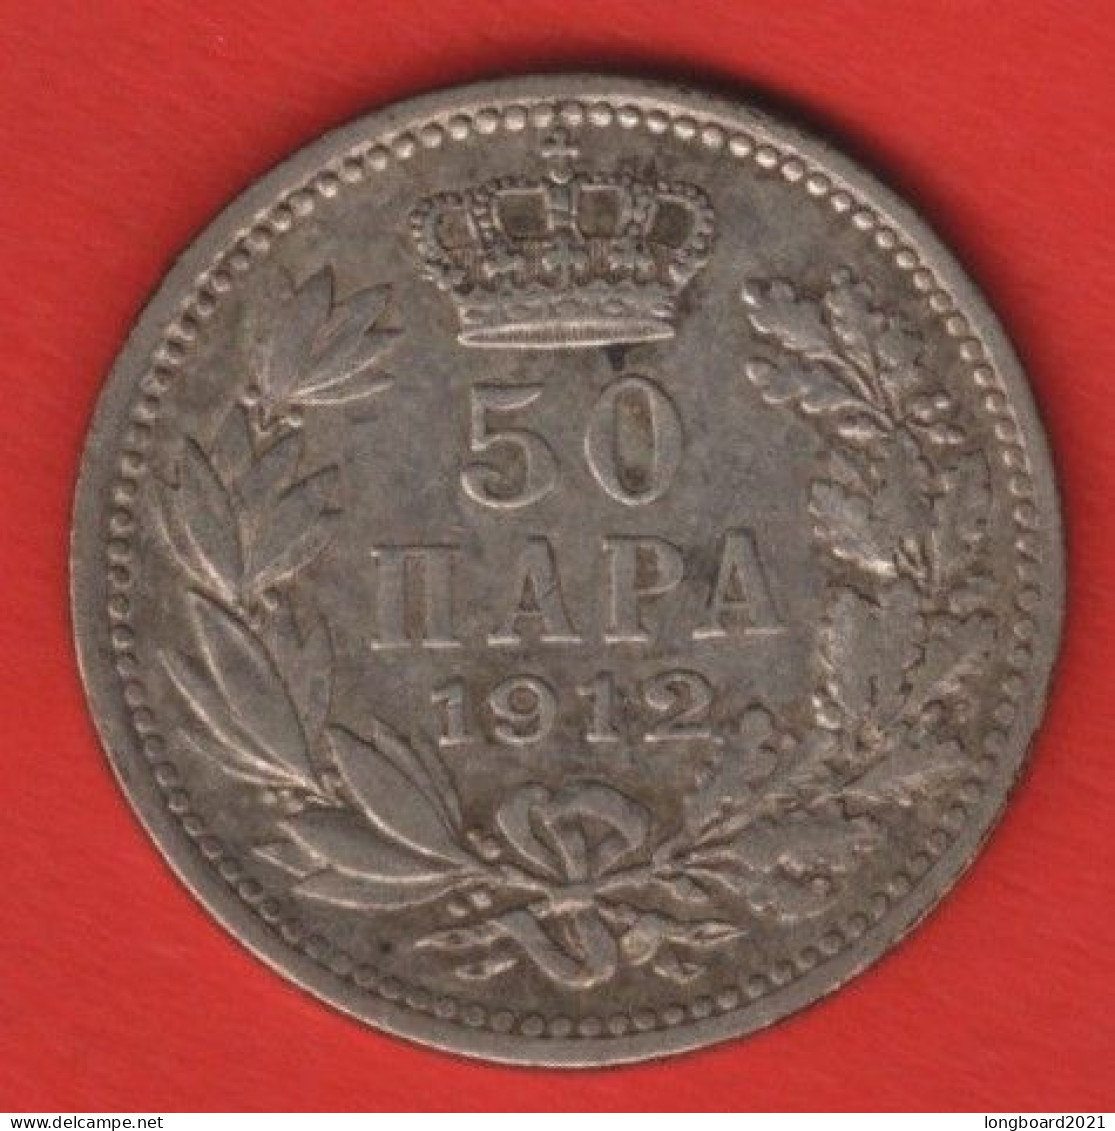 SERBIA - 50 PARA 1912 - Serbia